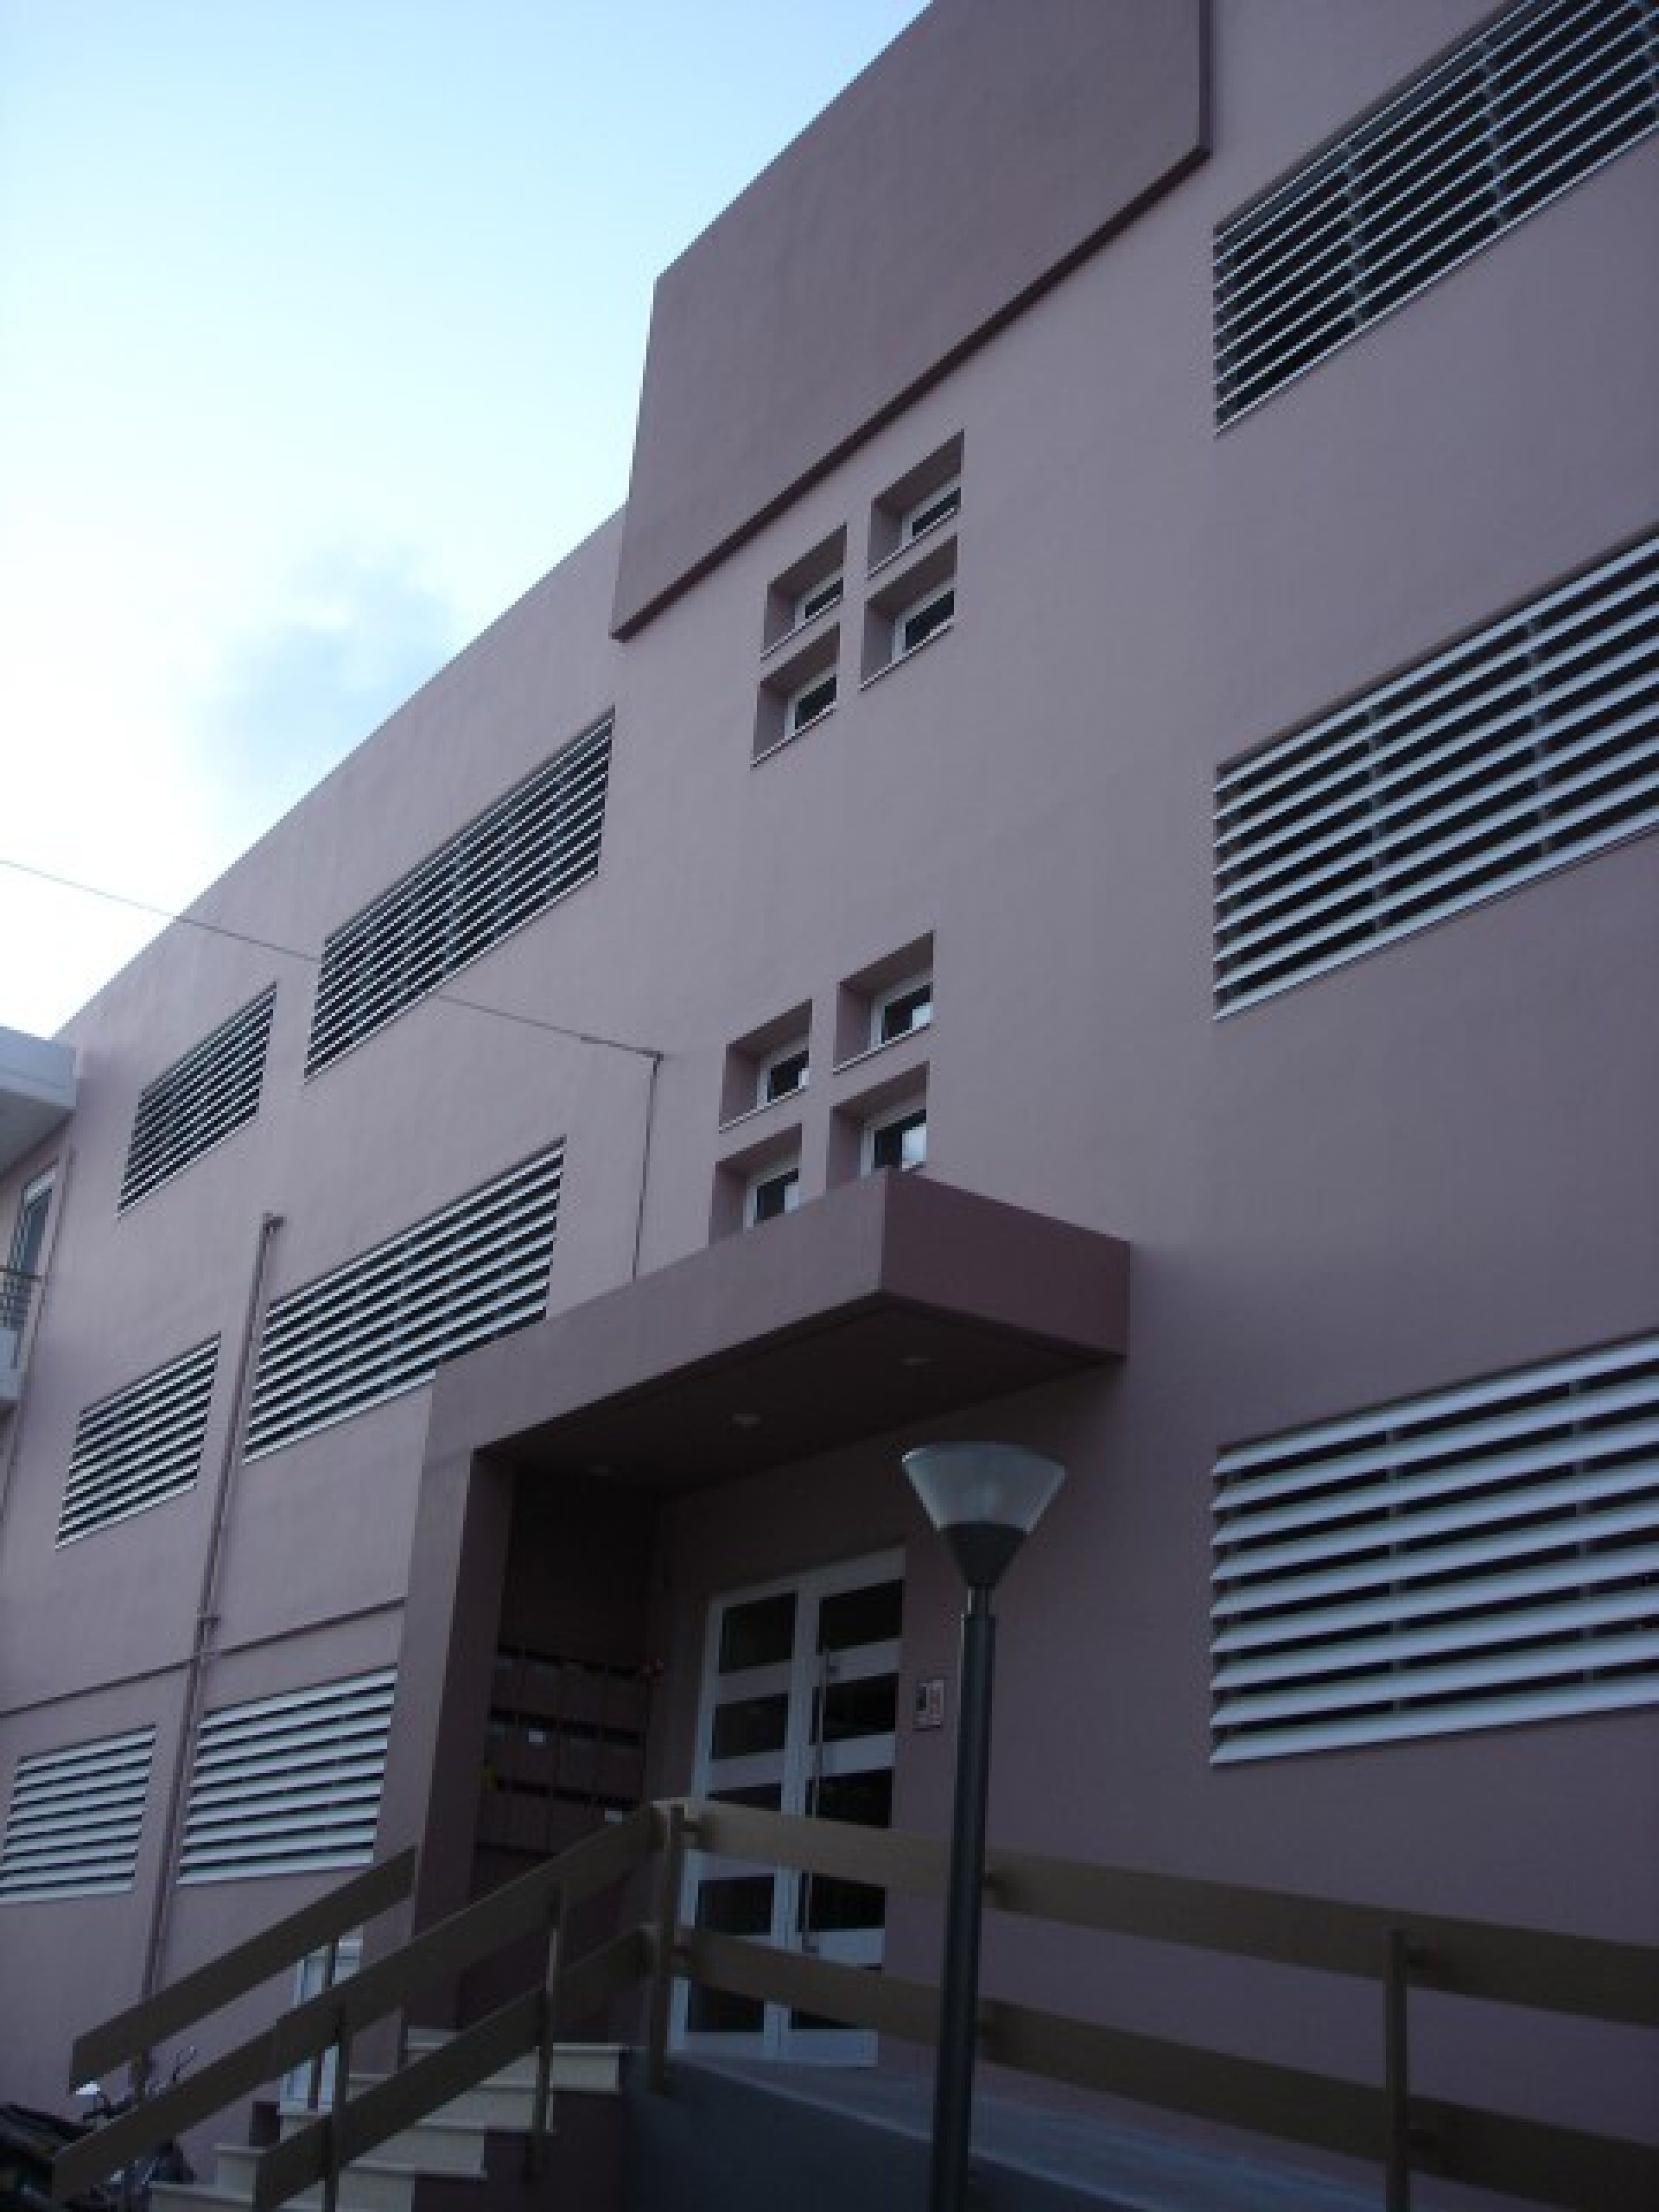 Three-storey residential complex